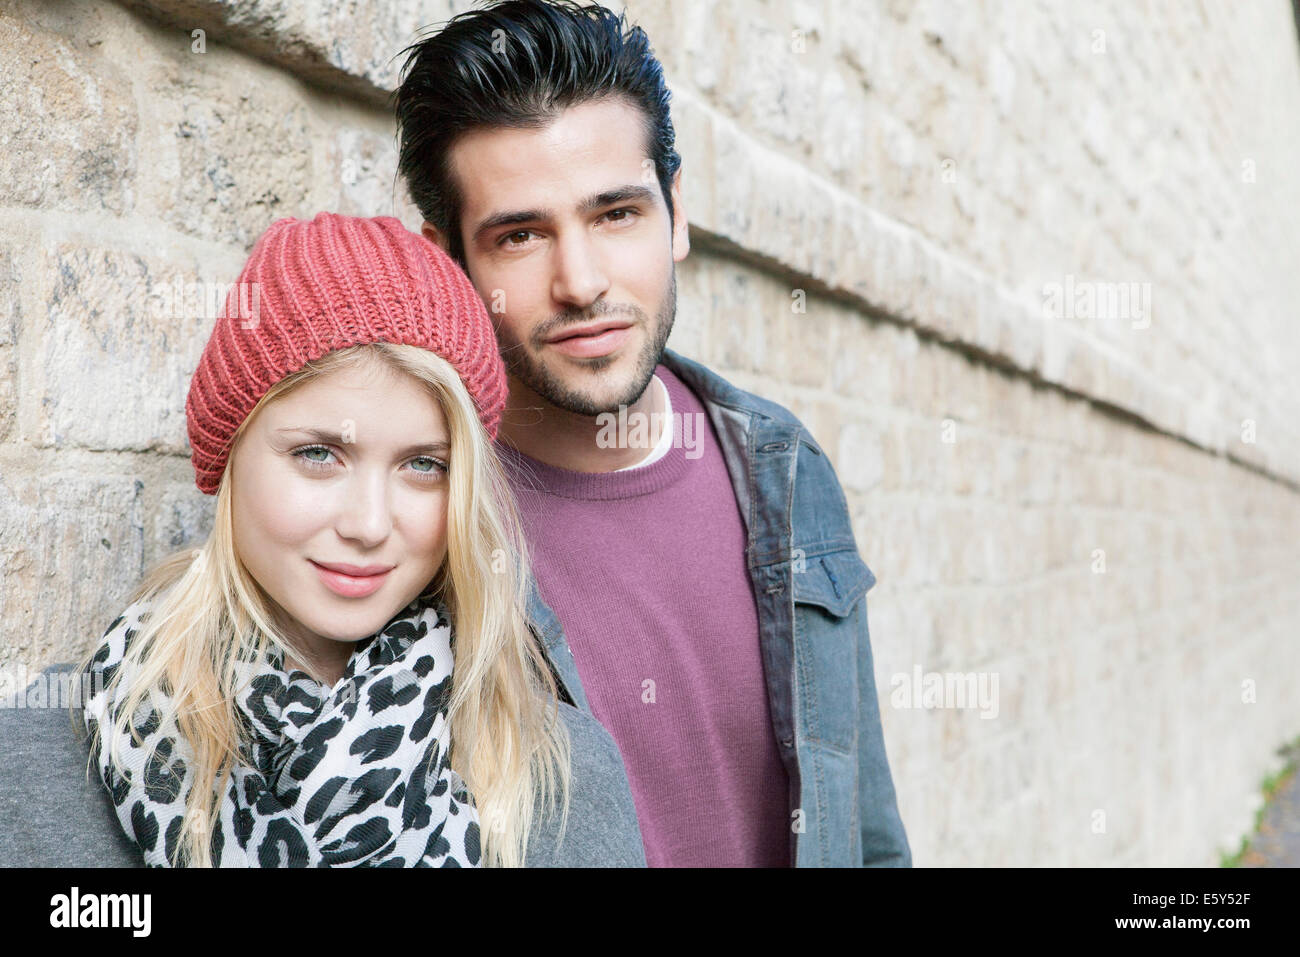 Fashionable young couple, portrait Stock Photo